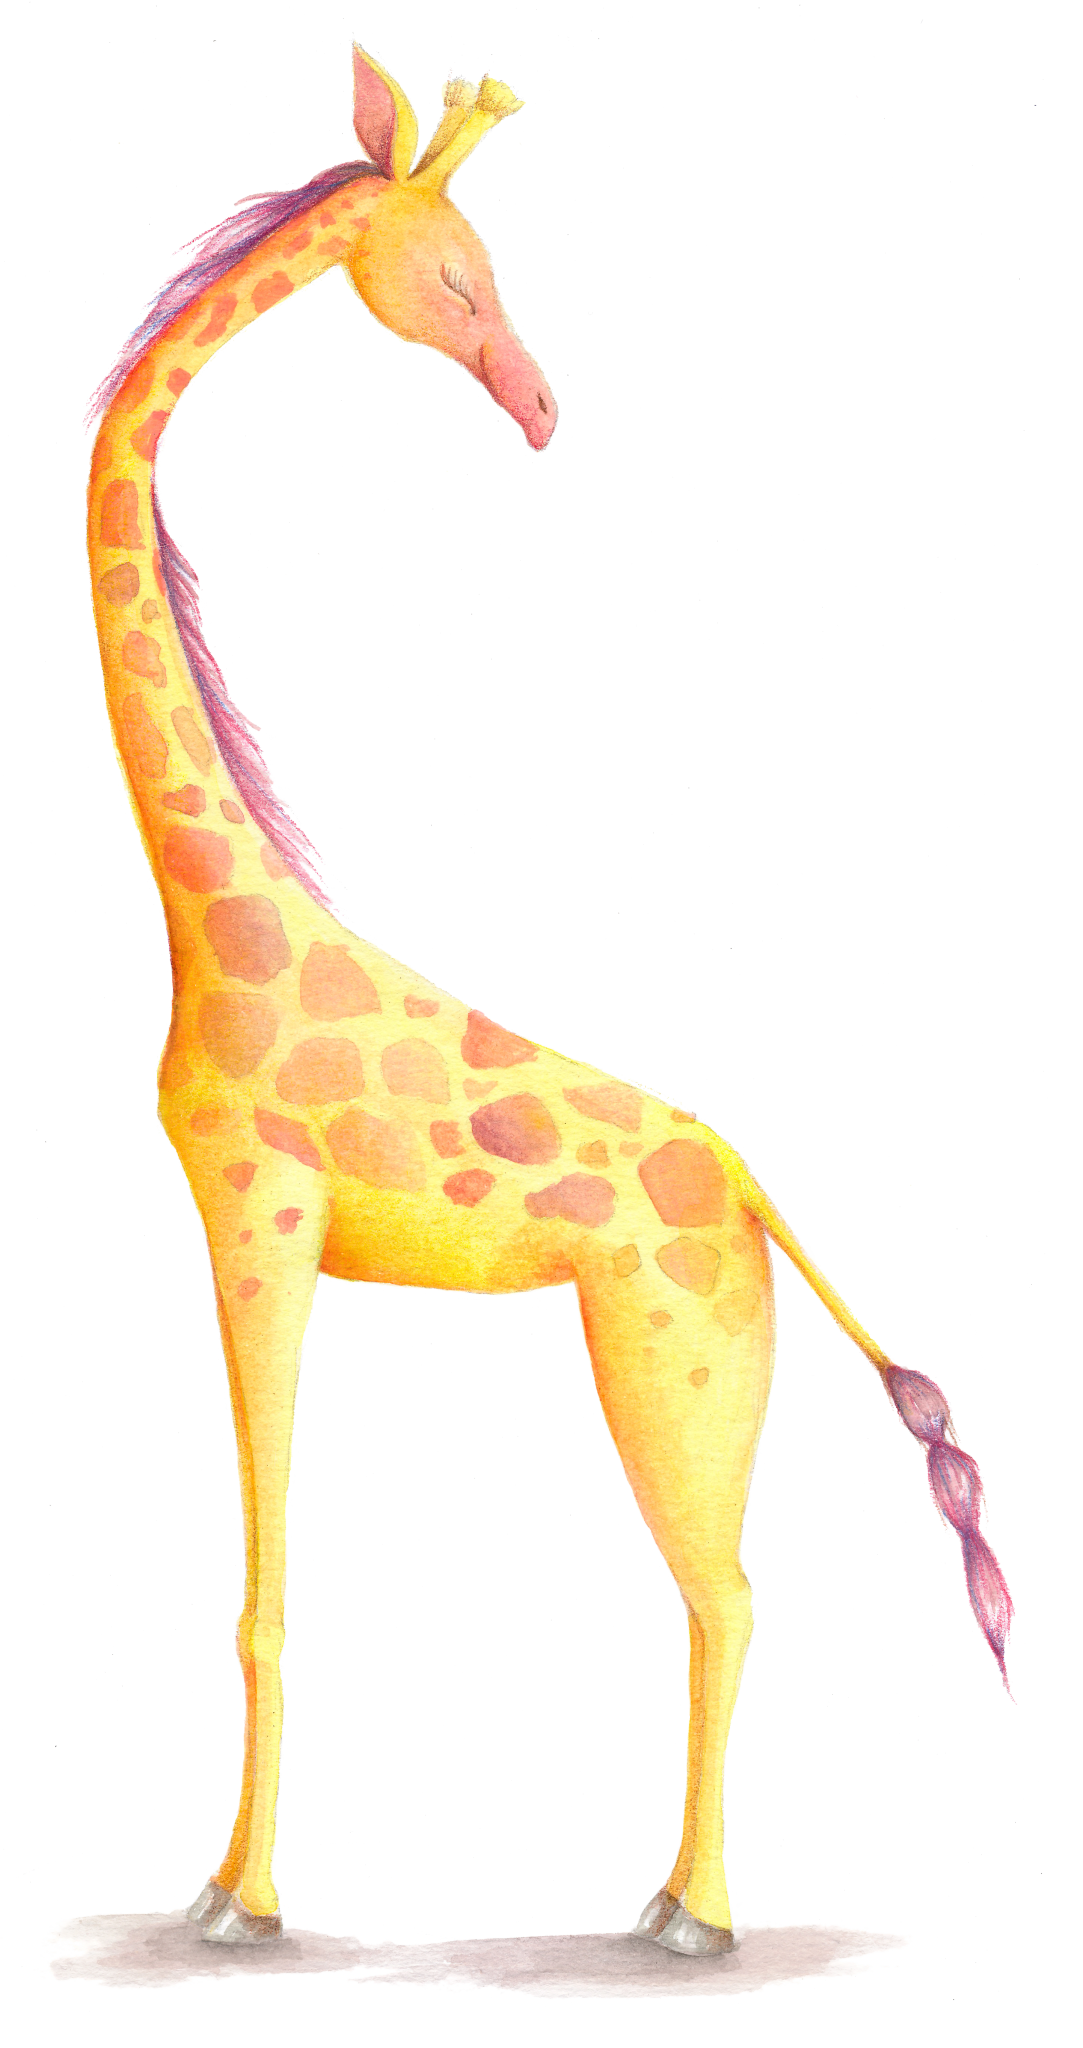 Giraffewshadow